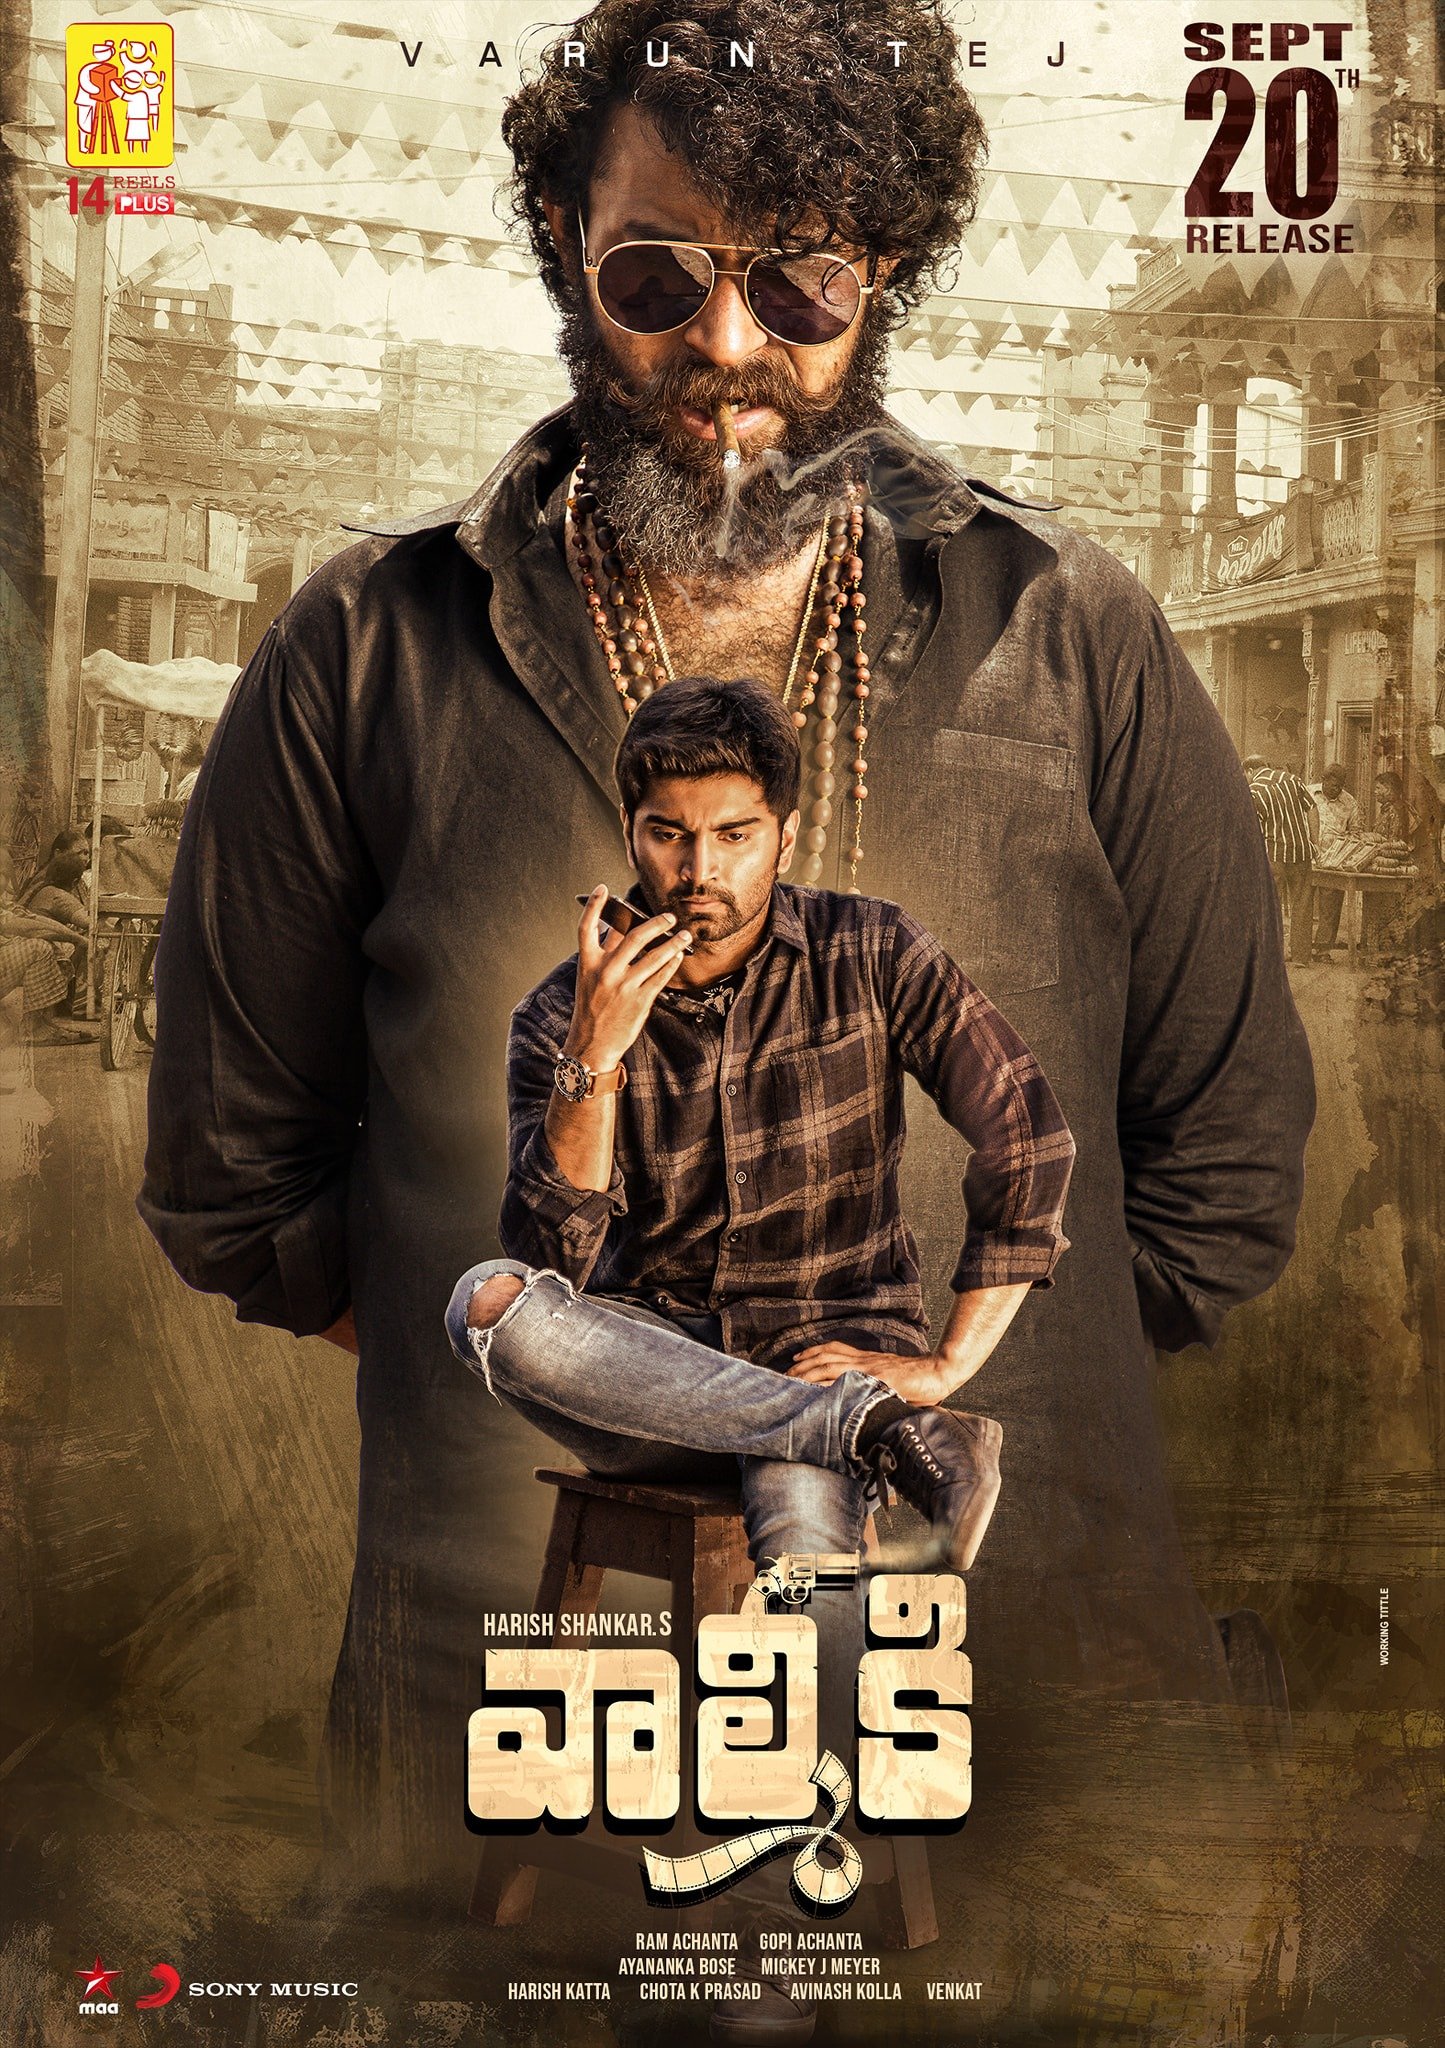 Telugu Movie Poster Wallpapers Wallpaper Cave